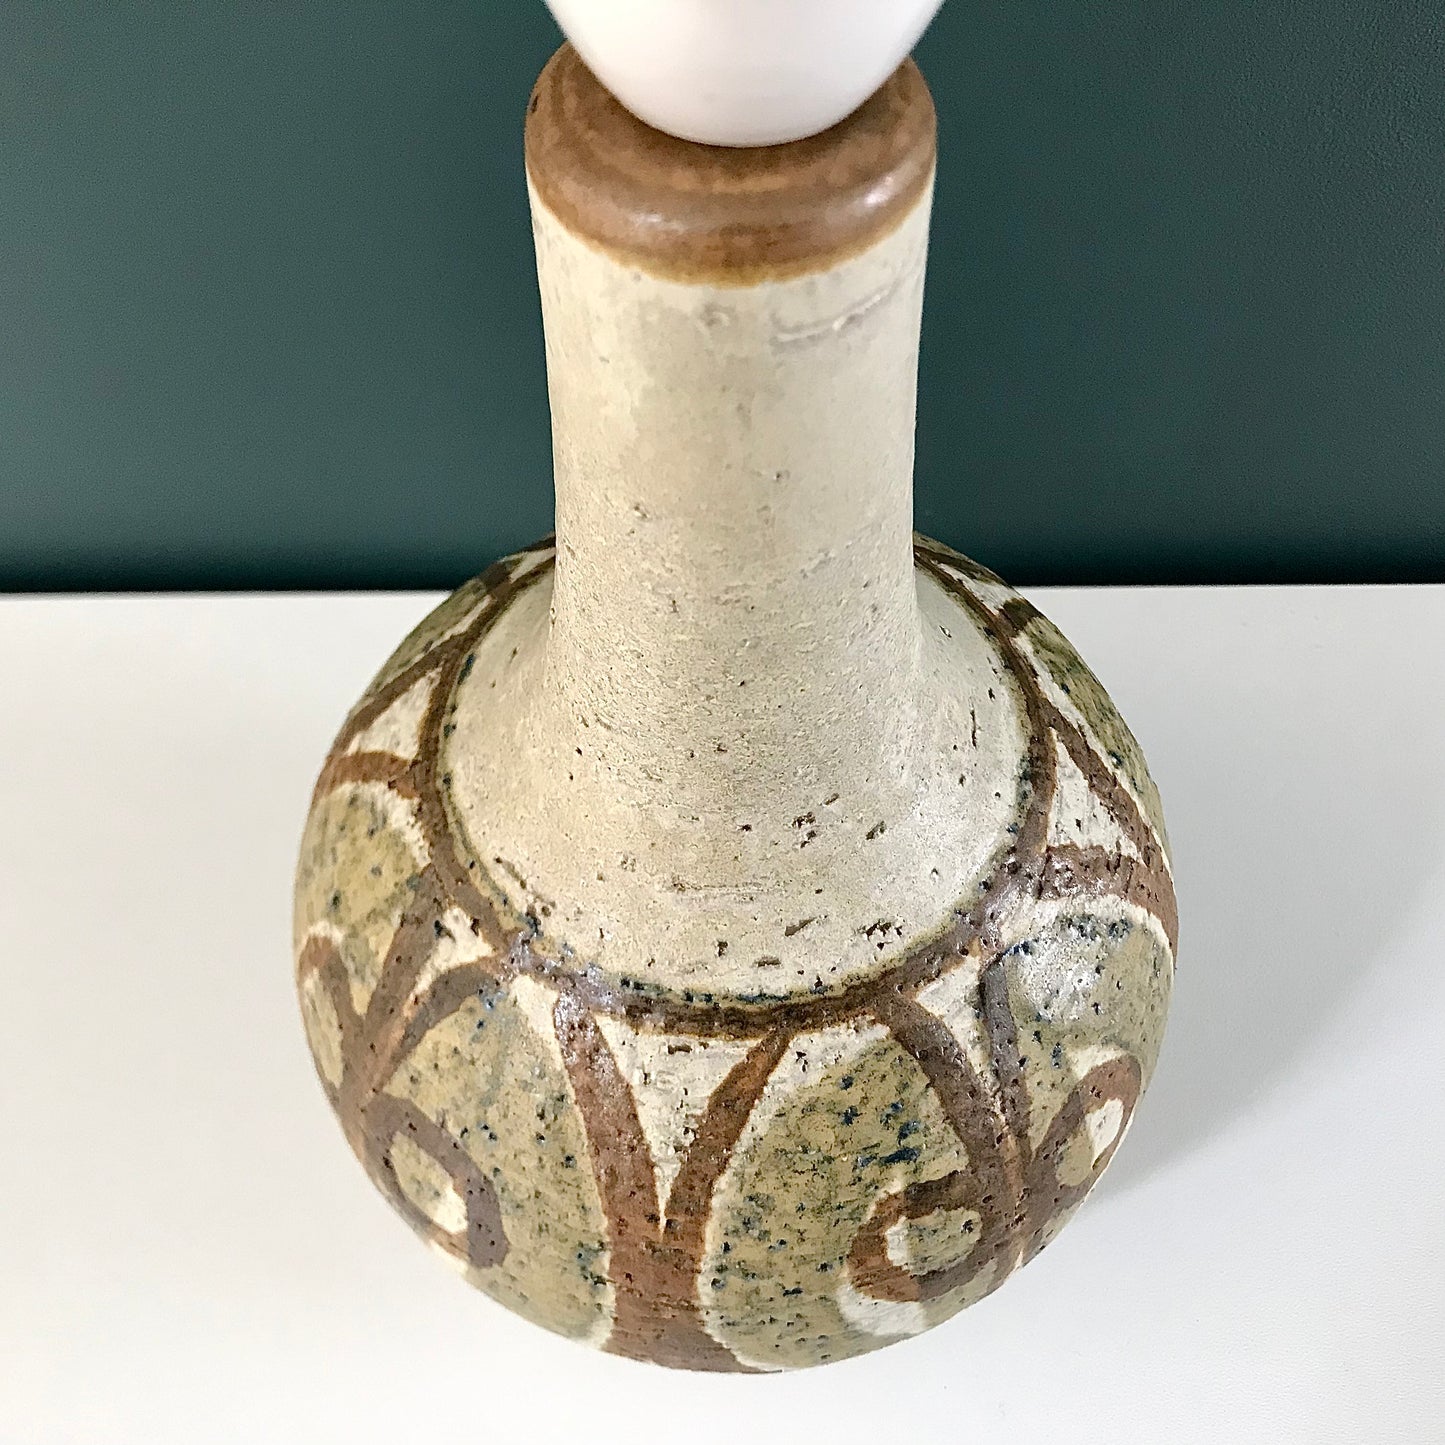 Soholm Pottery Olive Green Danish Ceramic Table Lamp Khaki 1960s 3068 Scandi Bedside Light